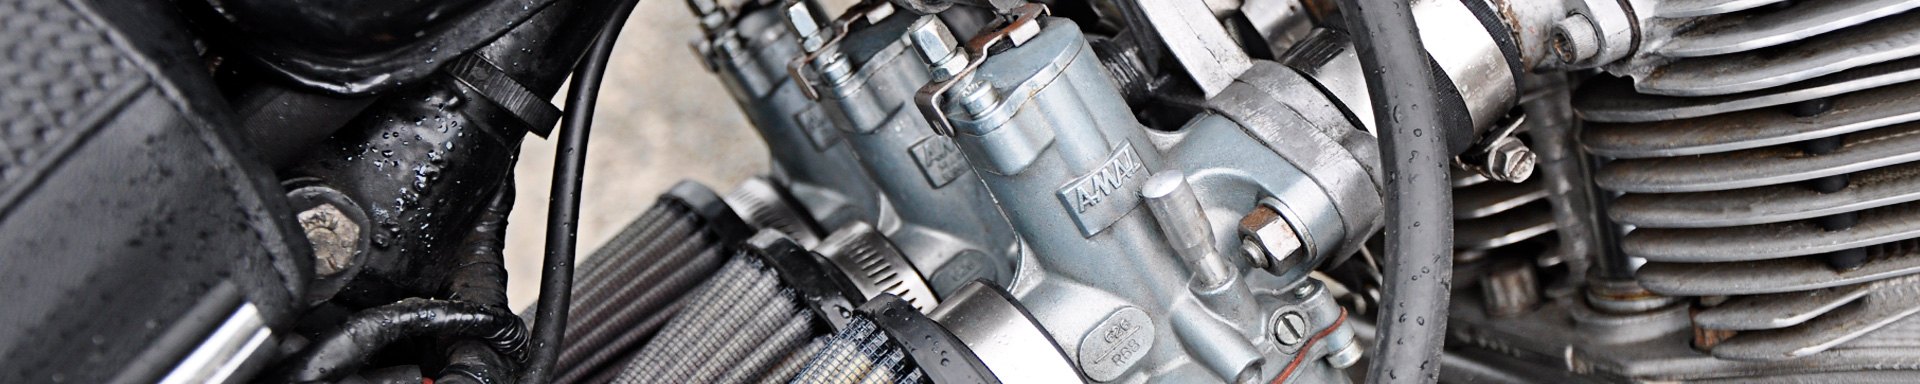 Yamaha XVS650 V Star Fuel Parts | Carburetors  Tanks - MOTORCYCLEiD.com